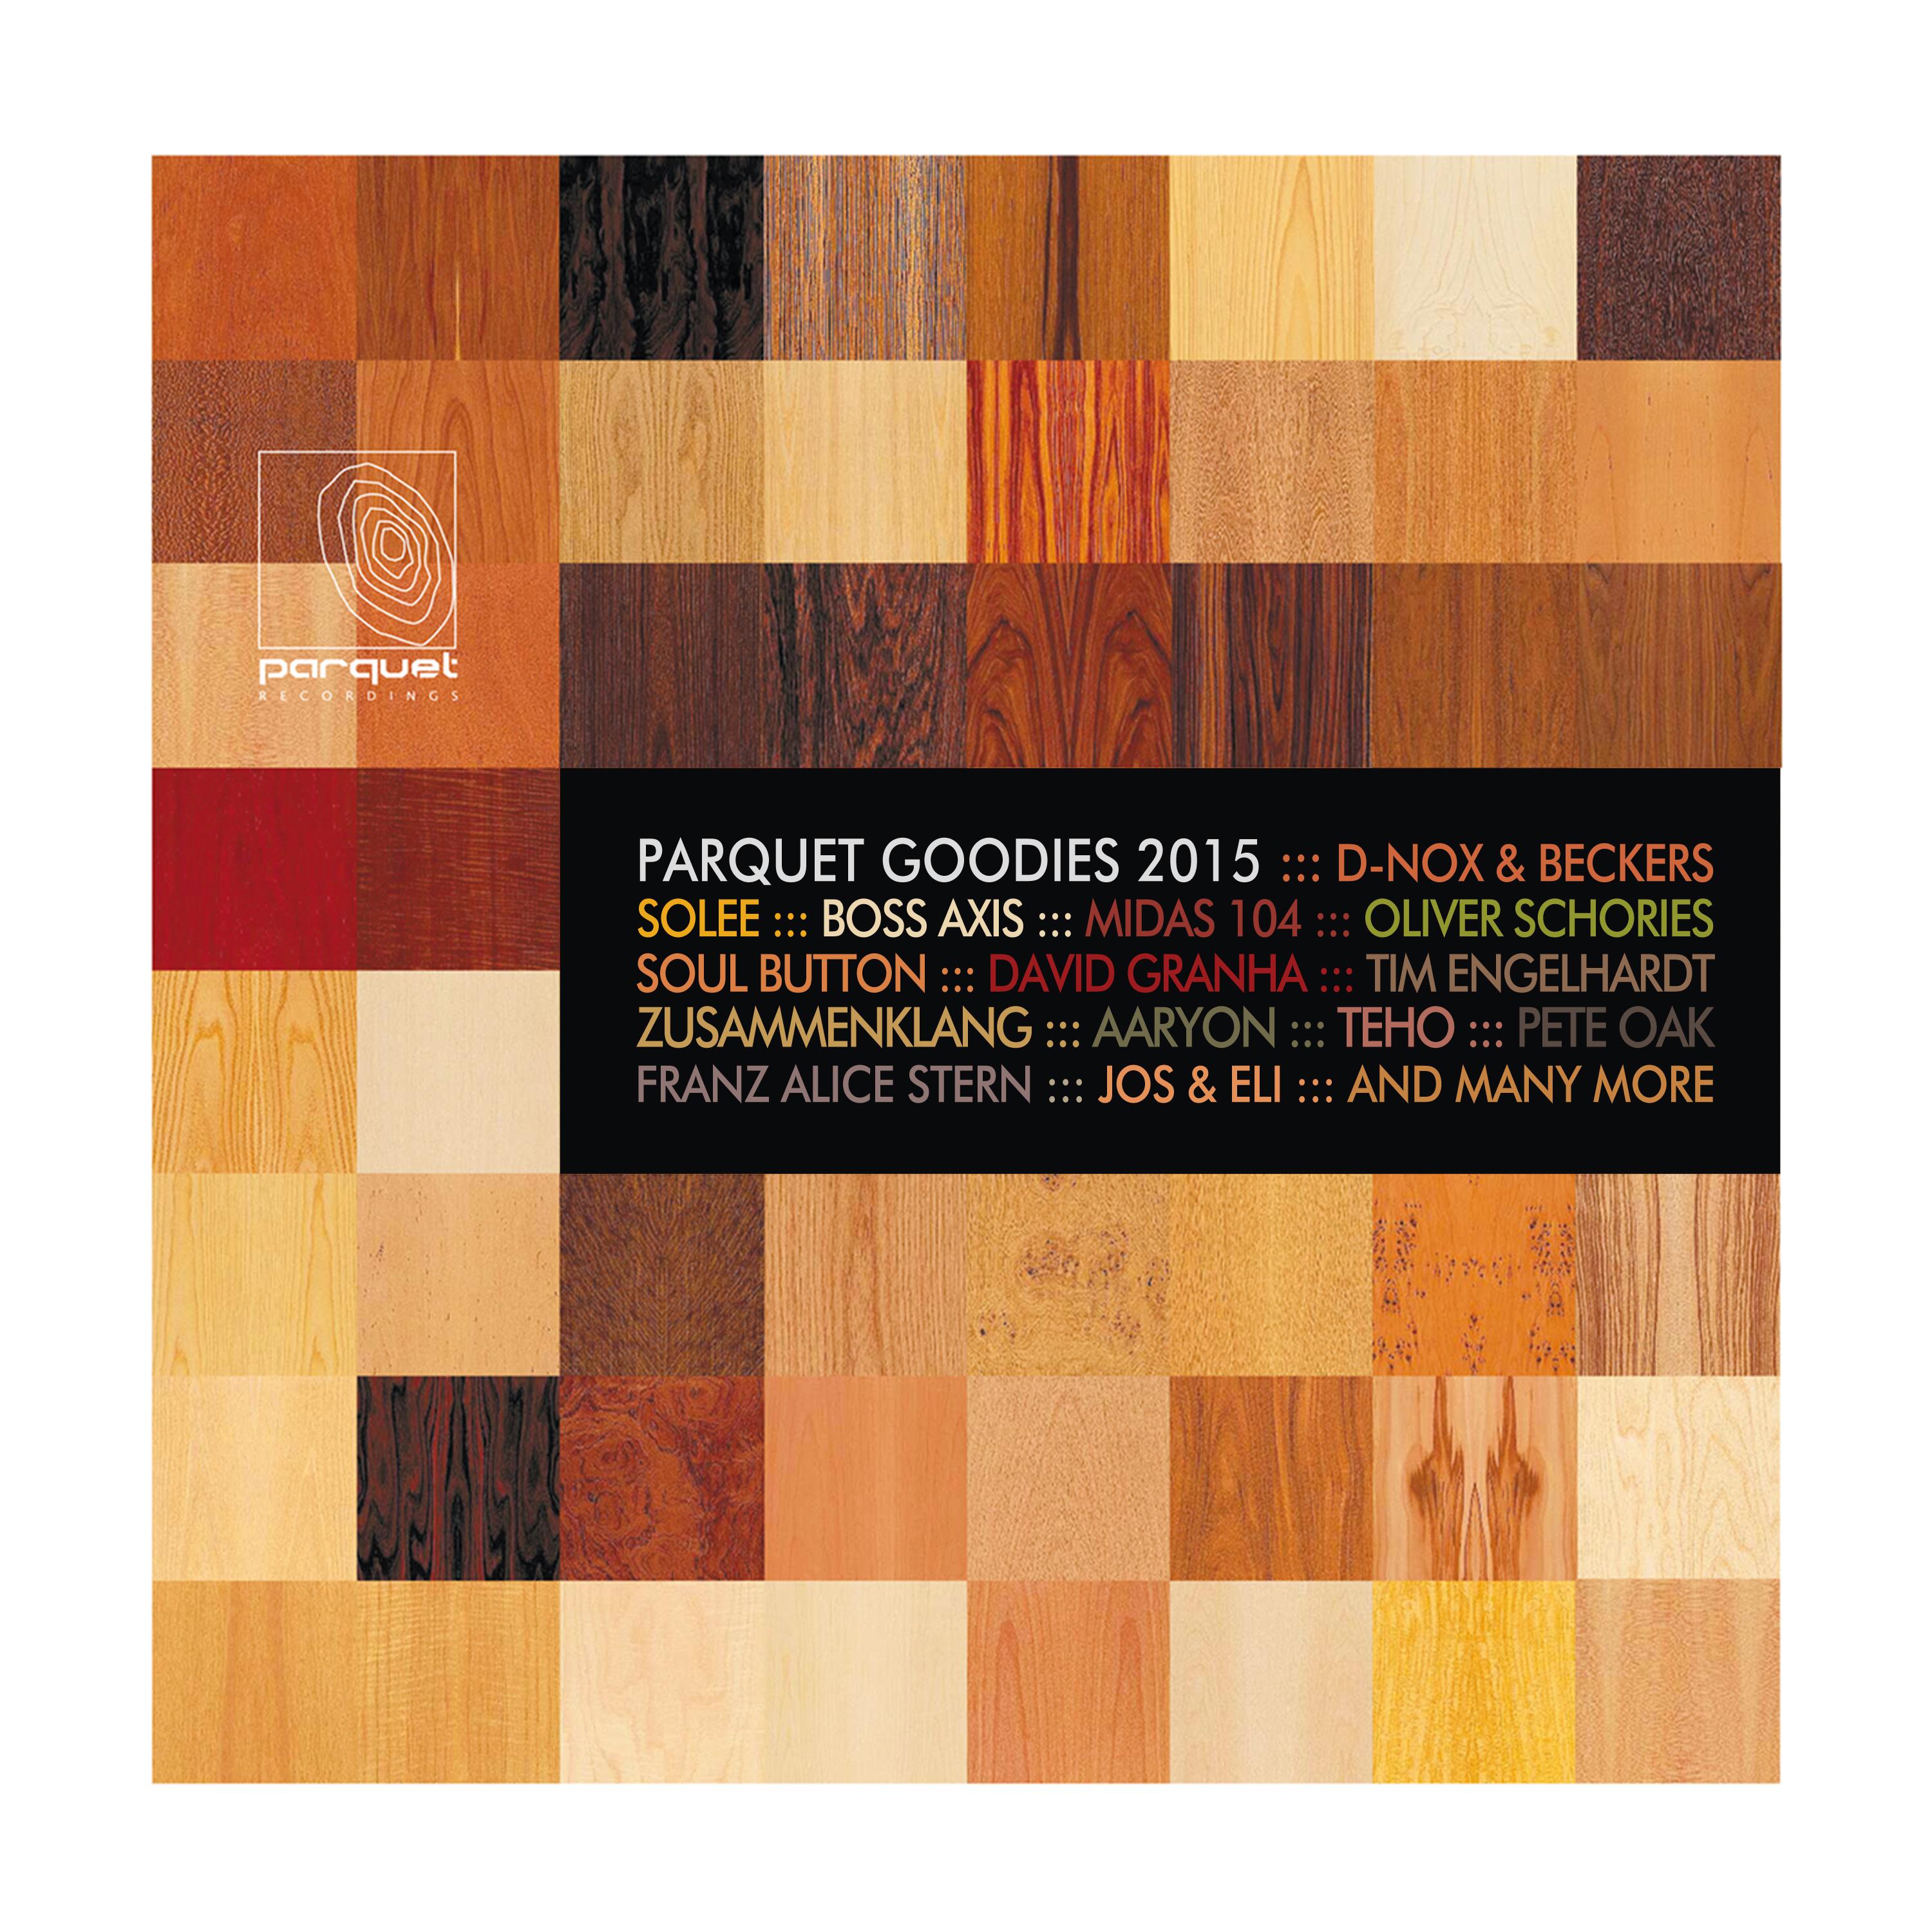 Parquet Goodies 2015